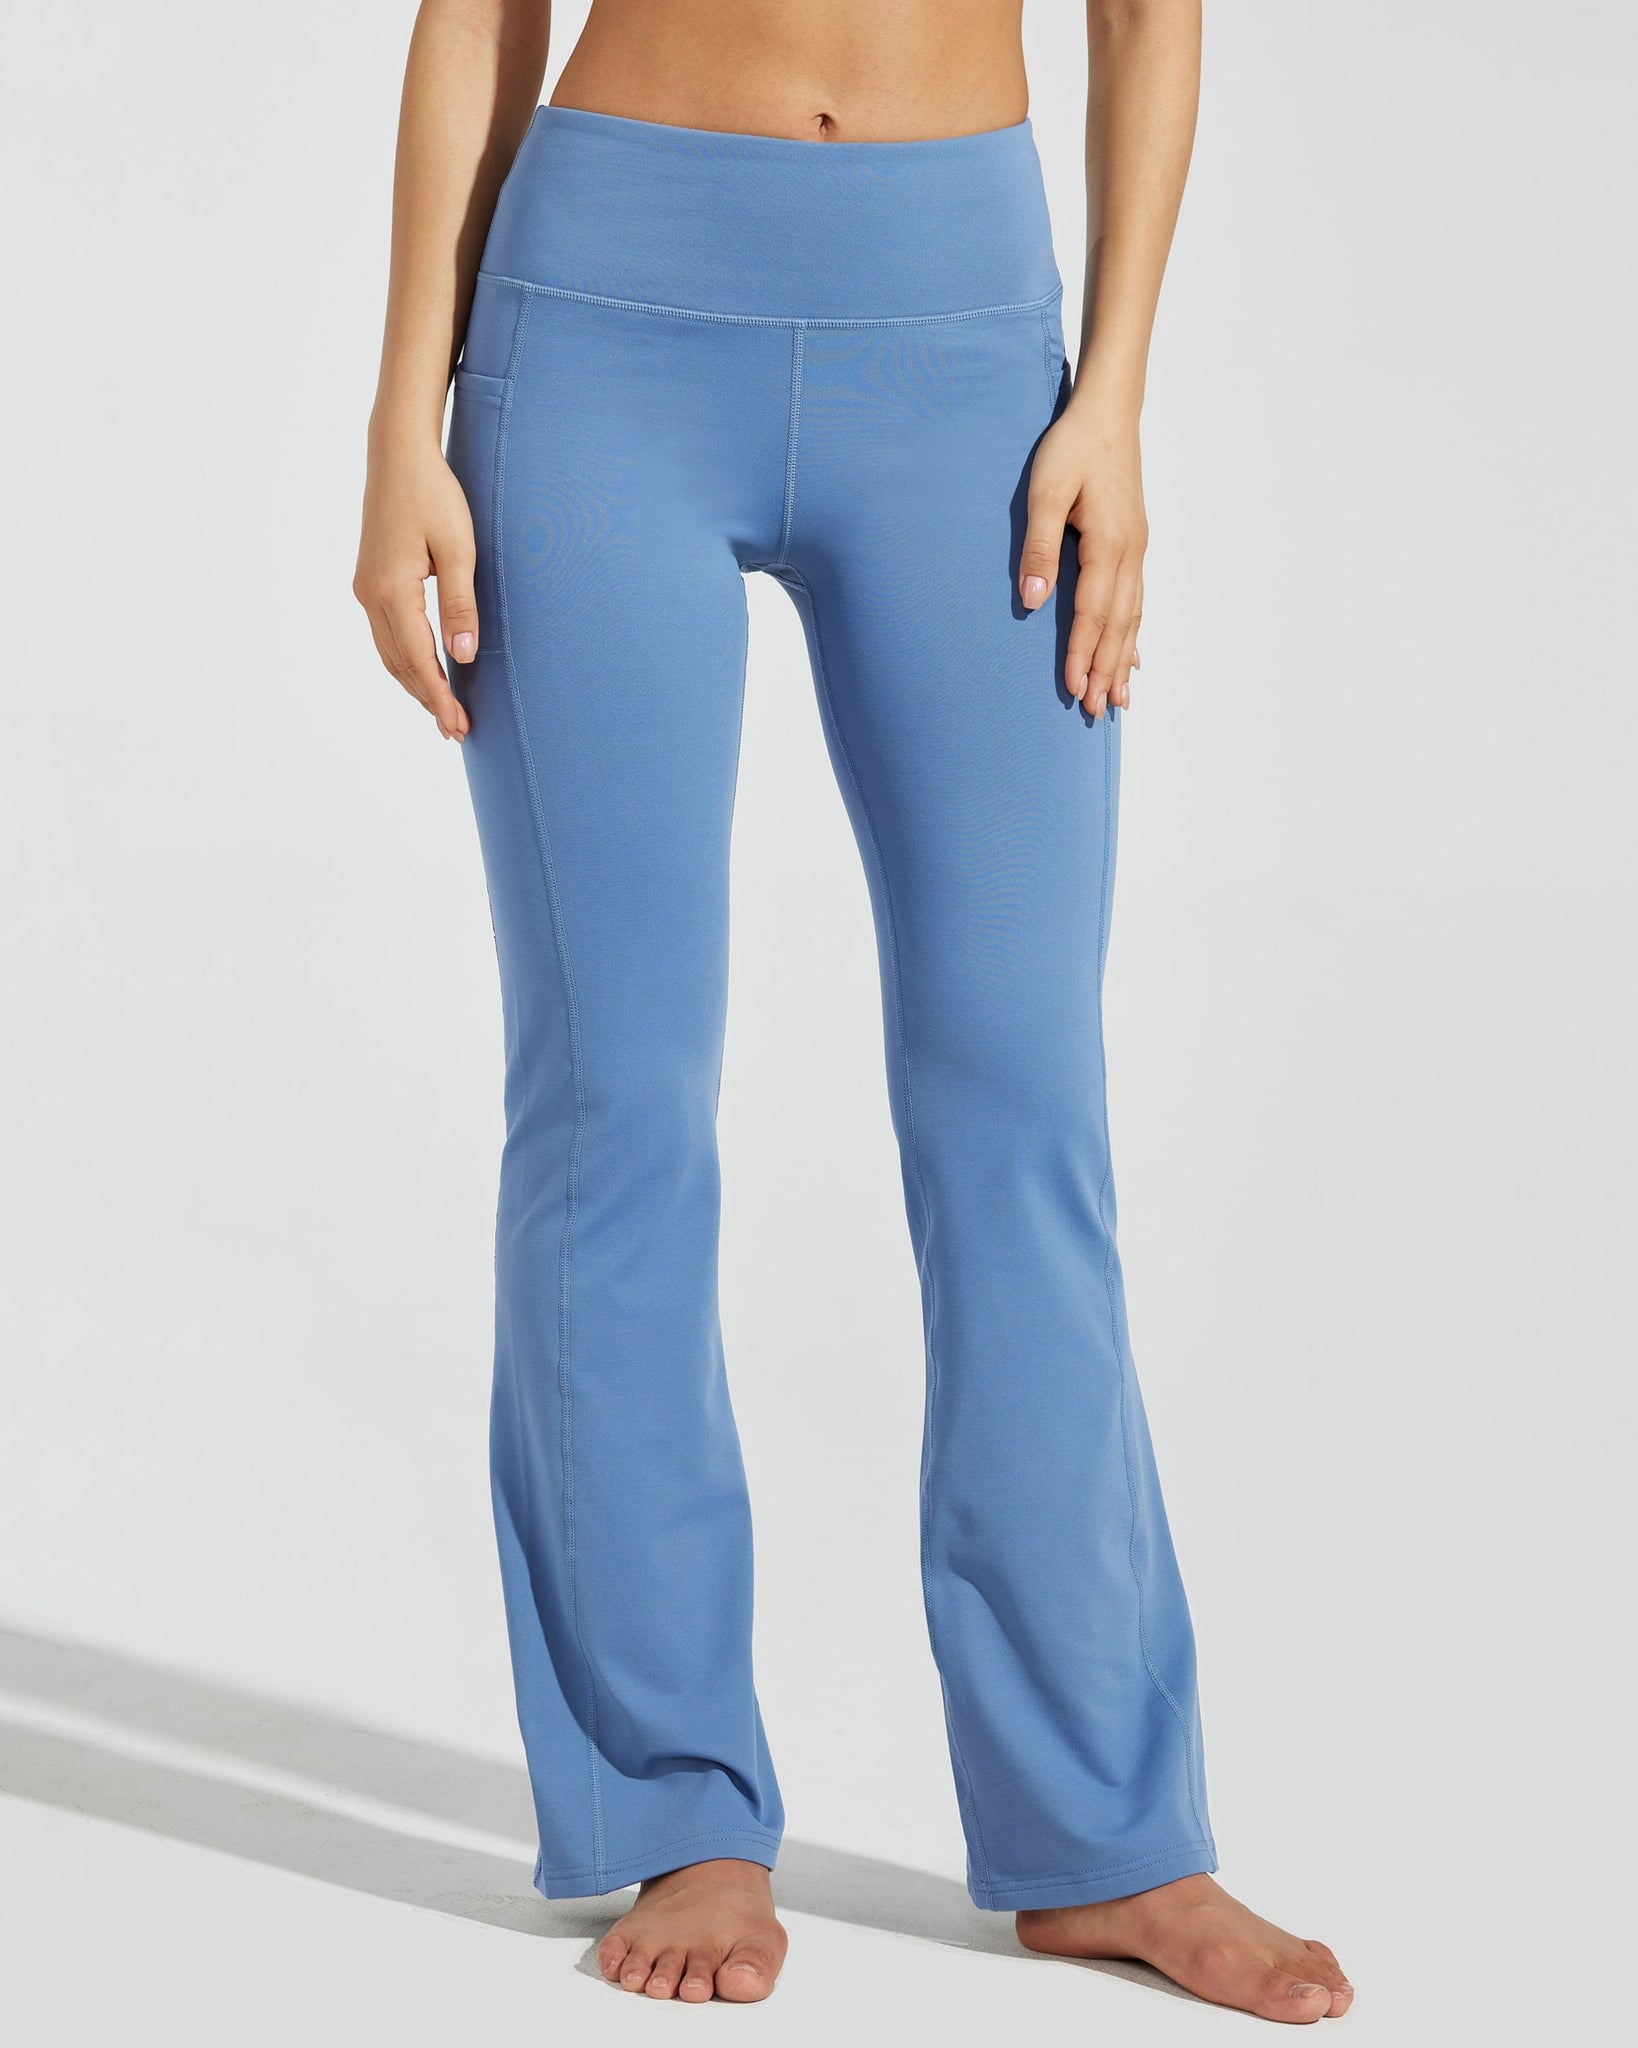 Women's Fleece Lined Bootcut Yoga Pants_Blue_model1